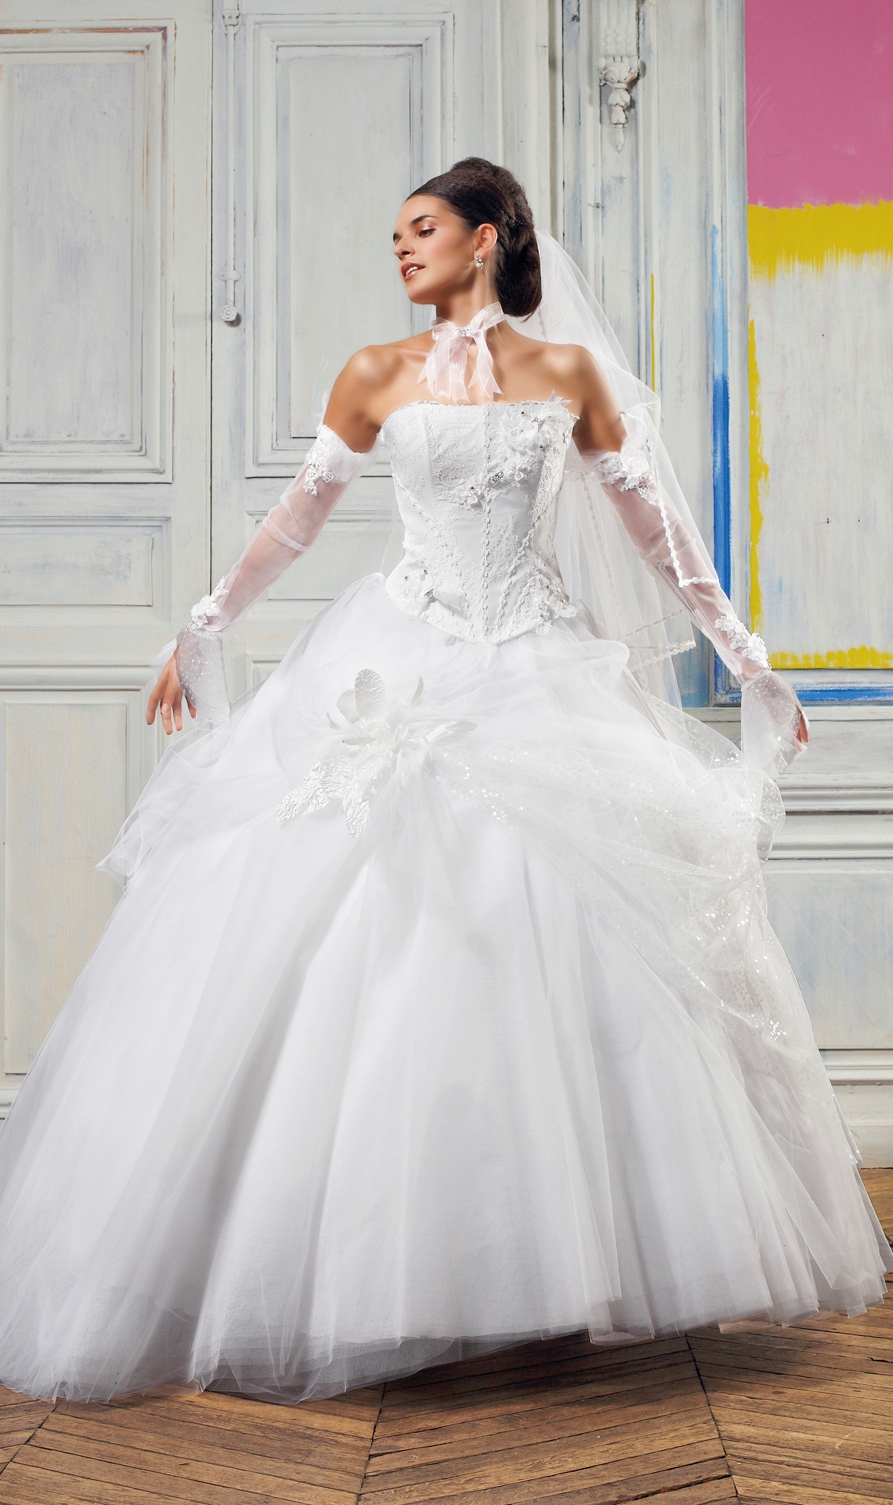 20 Corset Wedding Dresses Ideas - Wohh Wedding